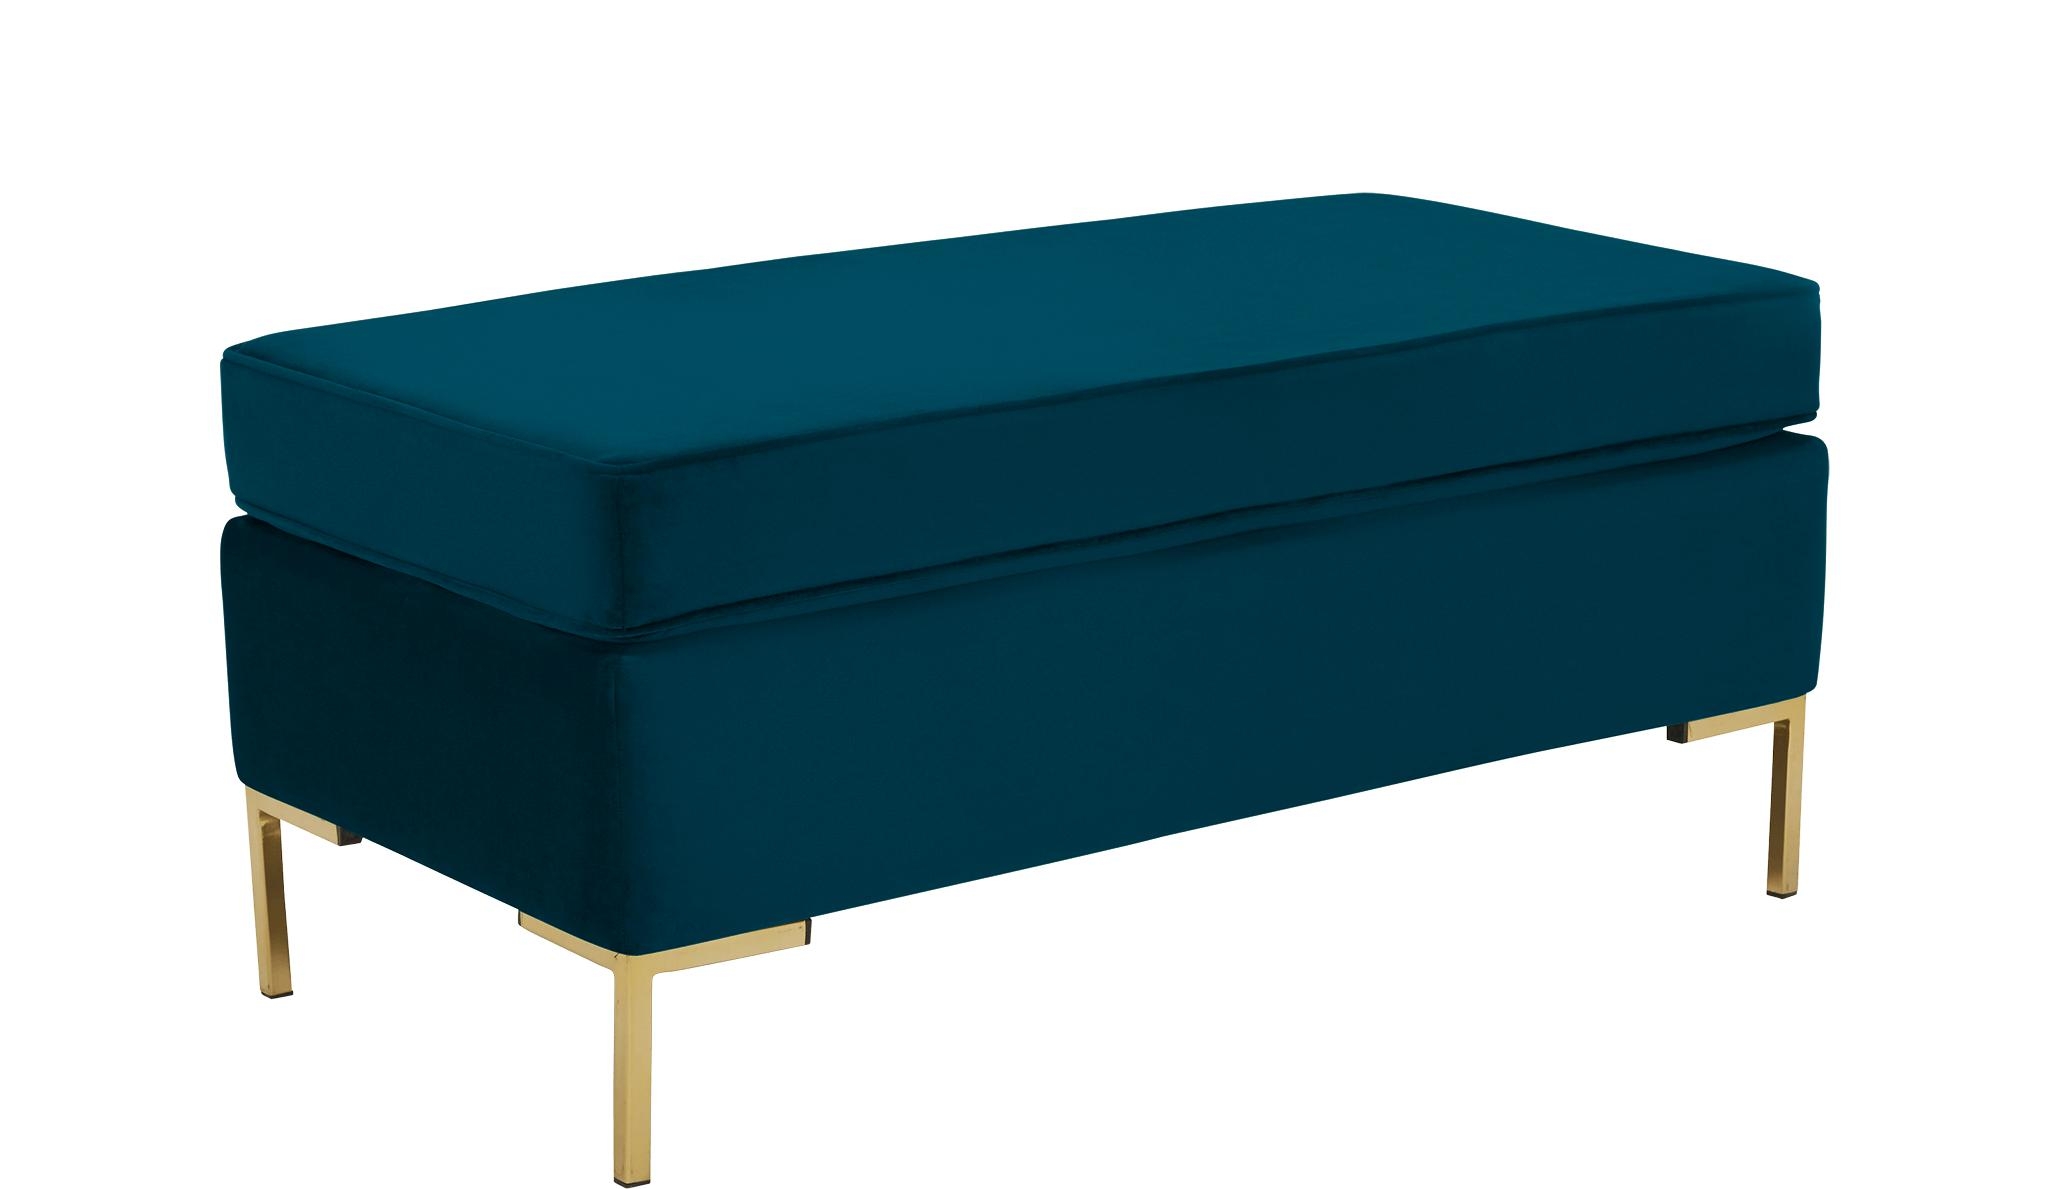 Blue Dee Mid Century Modern Bench with Storage - Key Largo Zenith Teal - Image 1